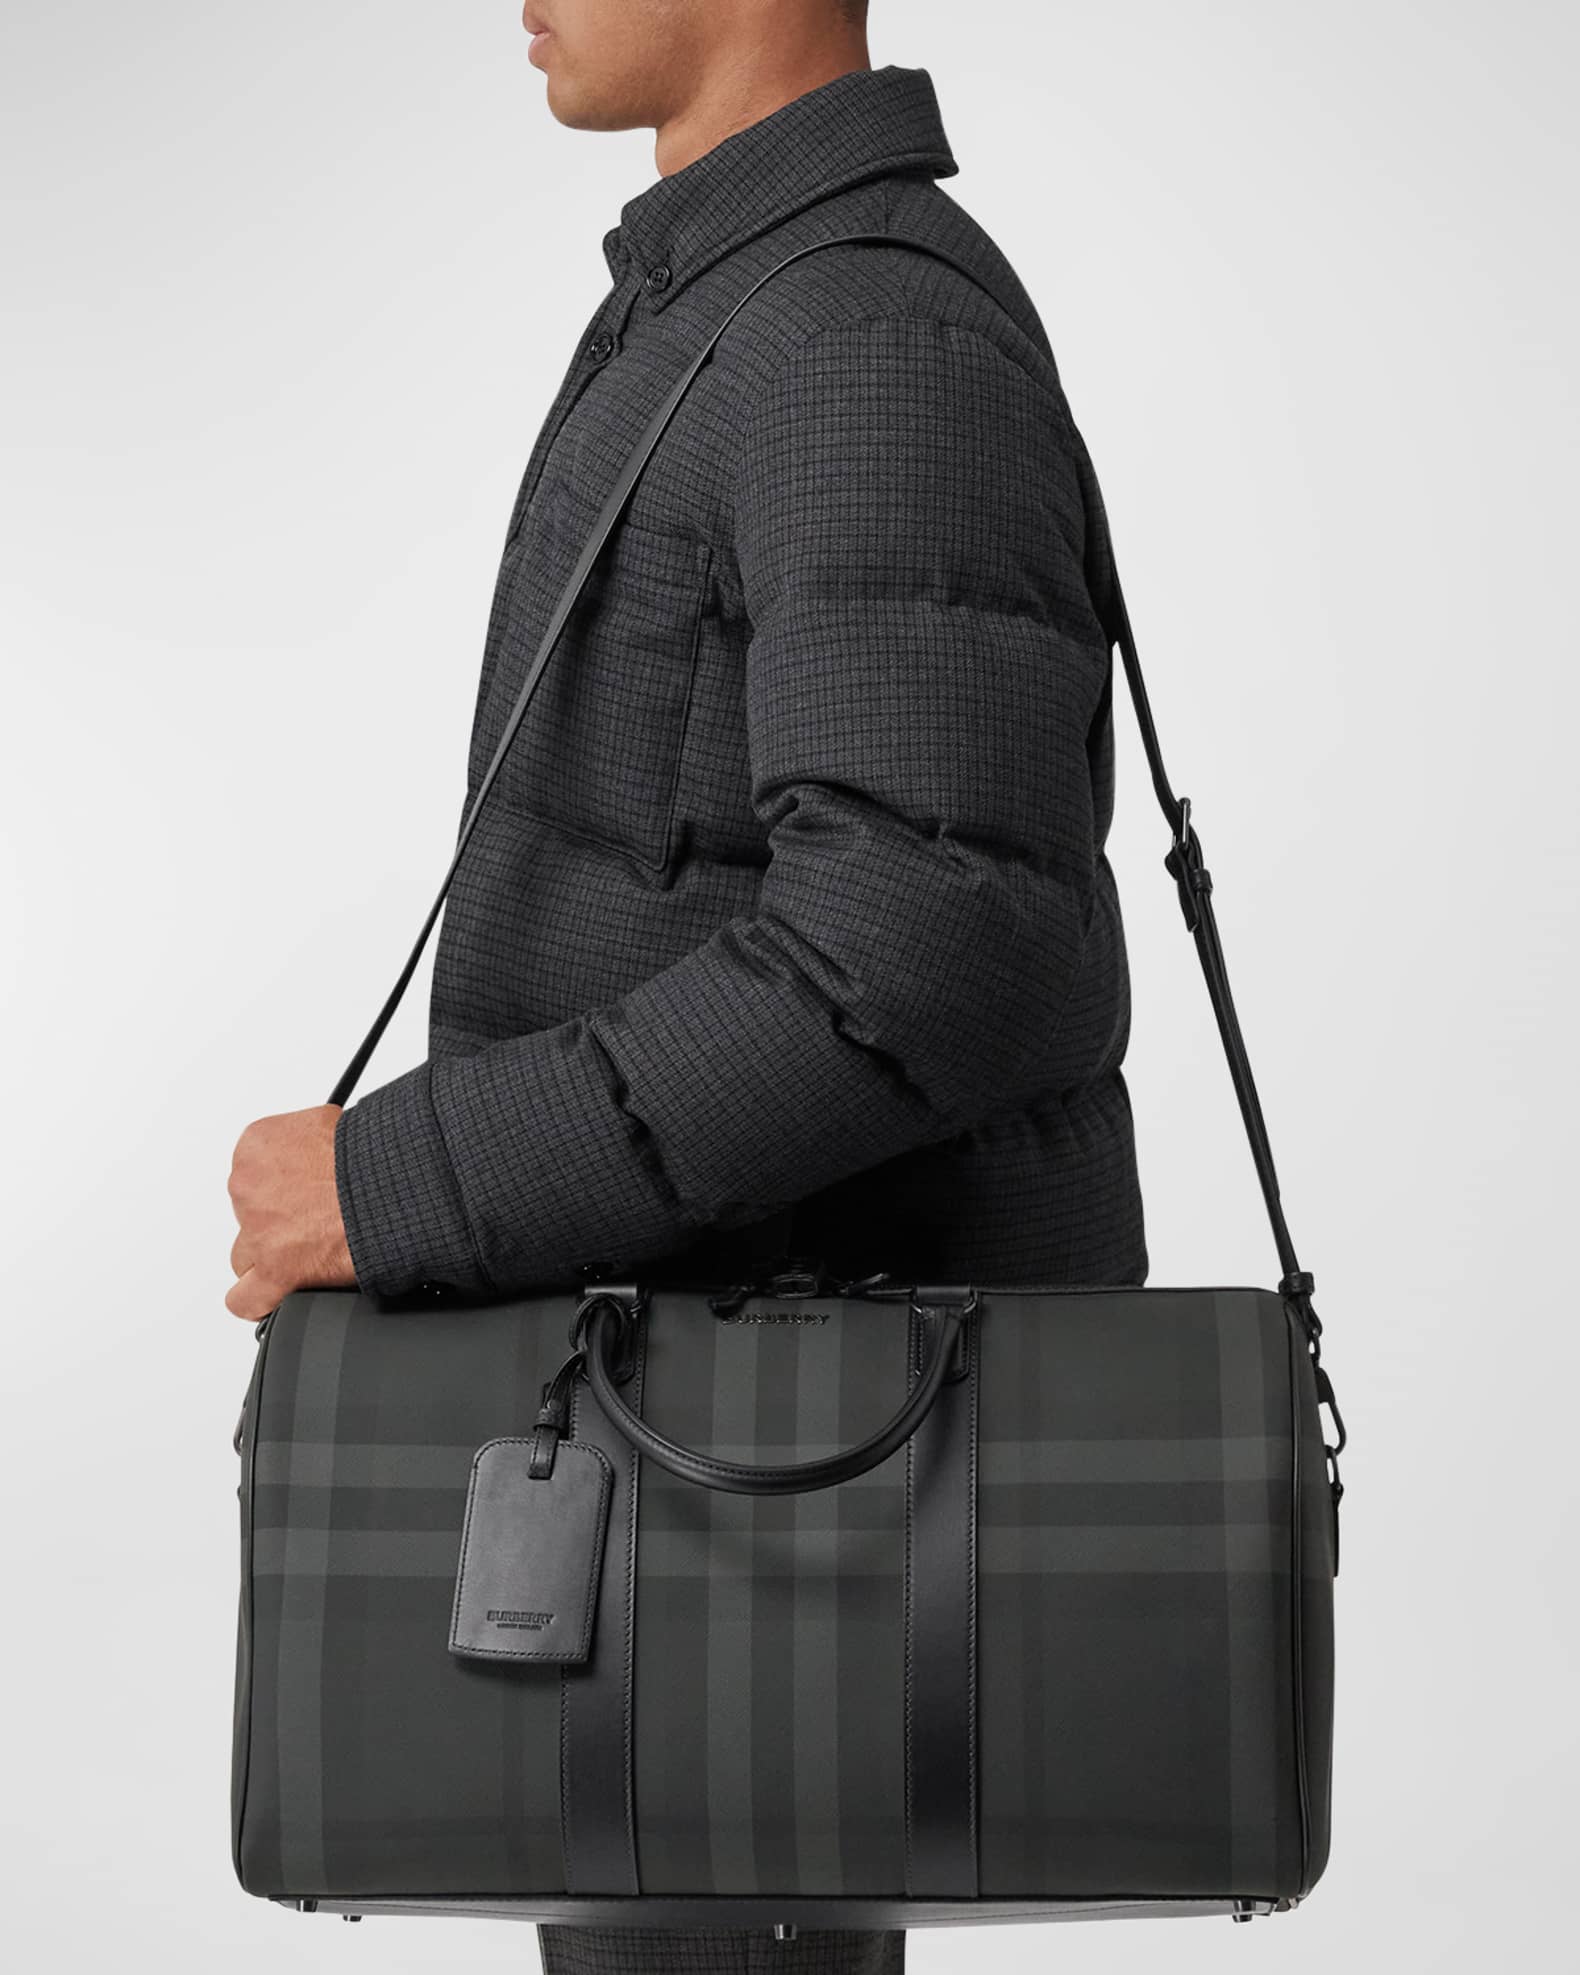 Burberry Tartan Patterned Duffle Bag in Black for Men